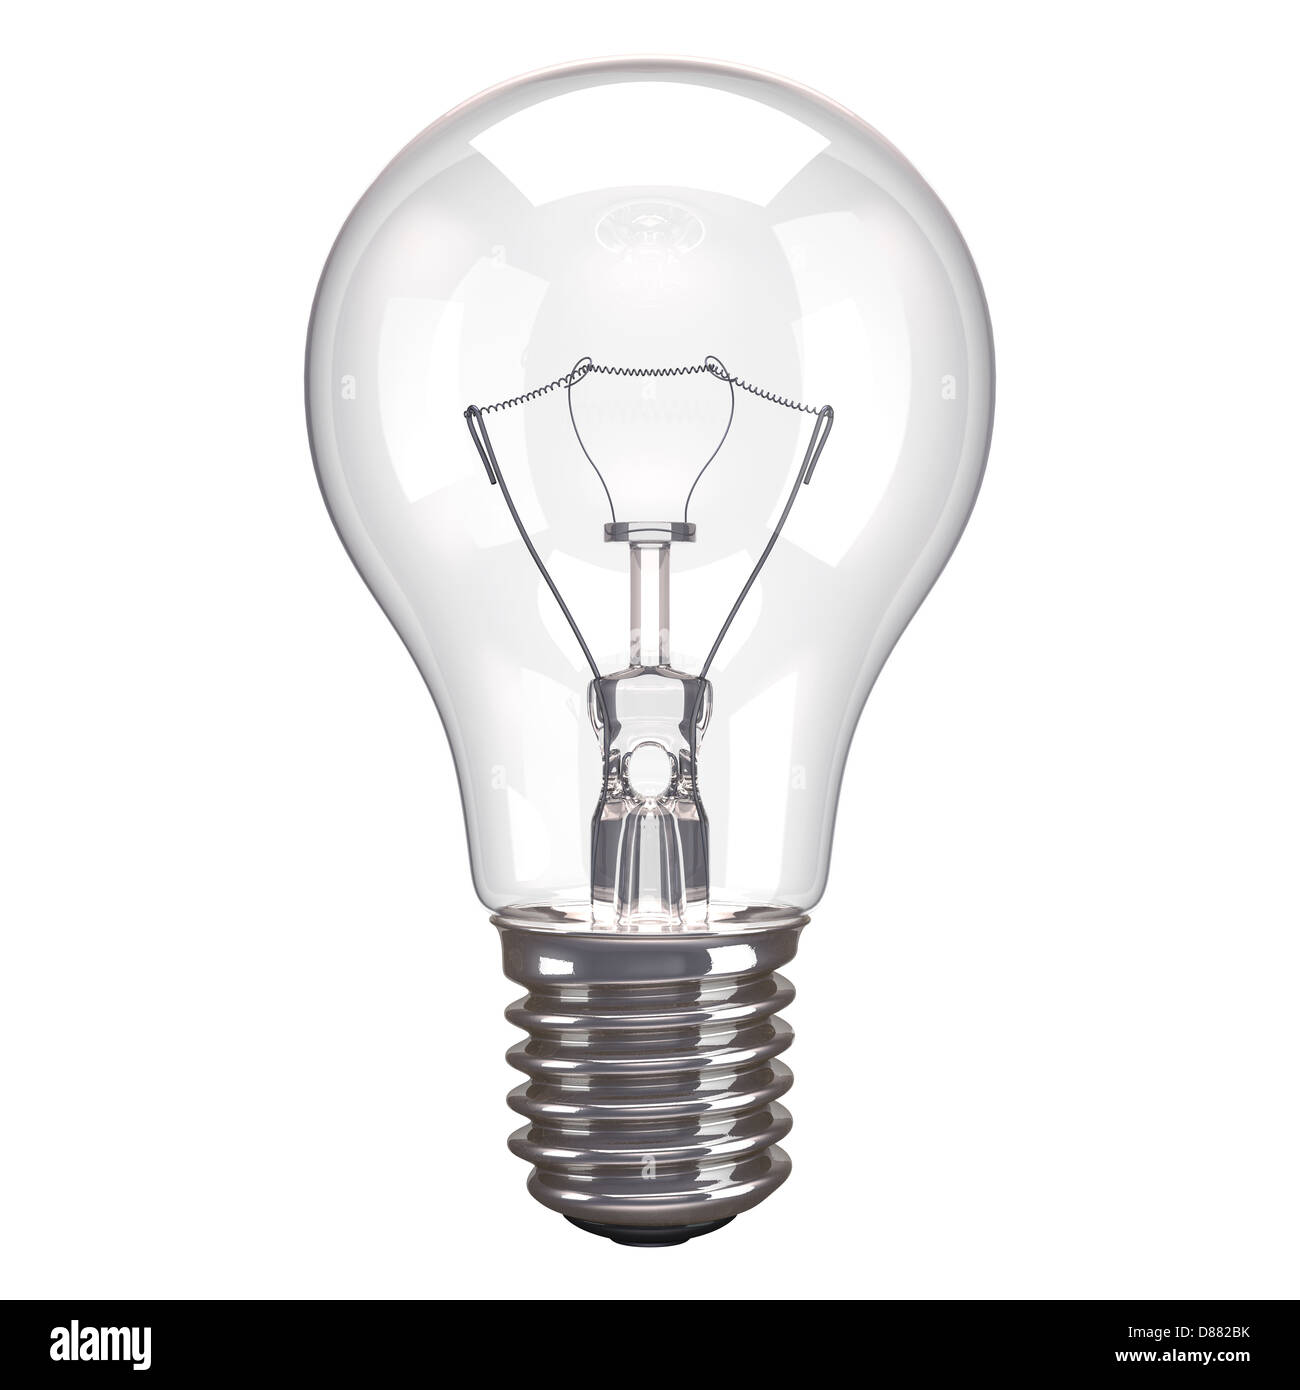 One lamp bulb isolated on white background. Stock Photo